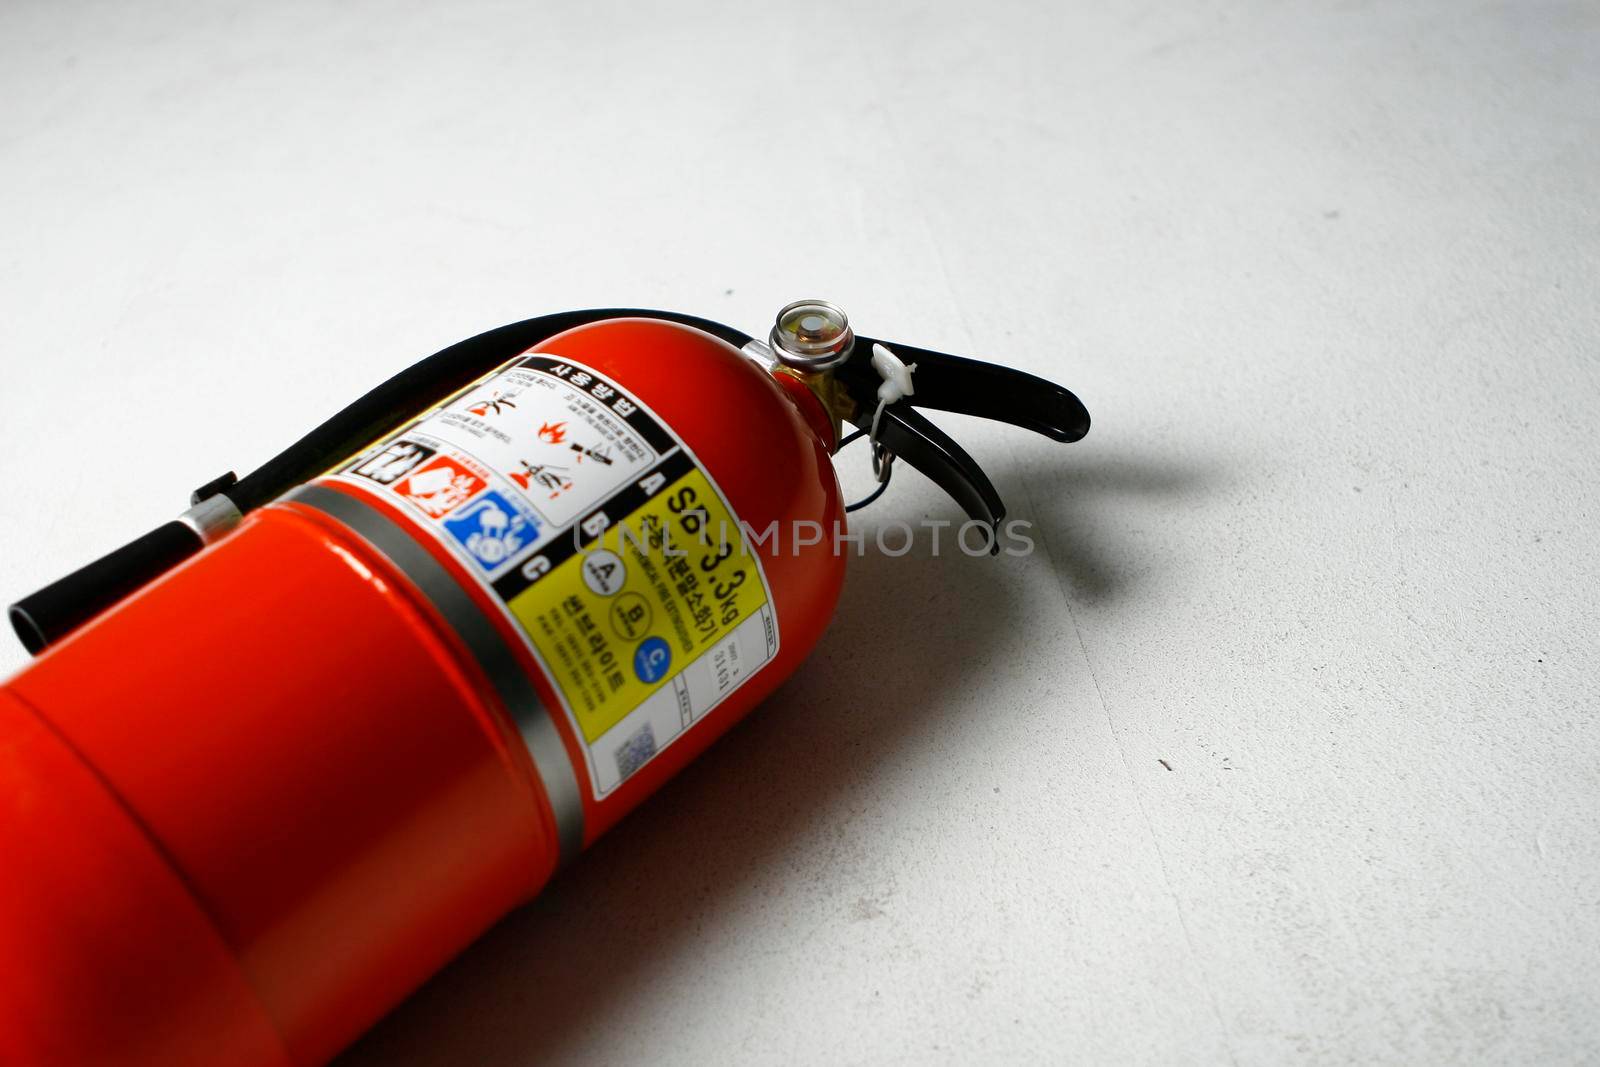 Fire Extinguisher on white background